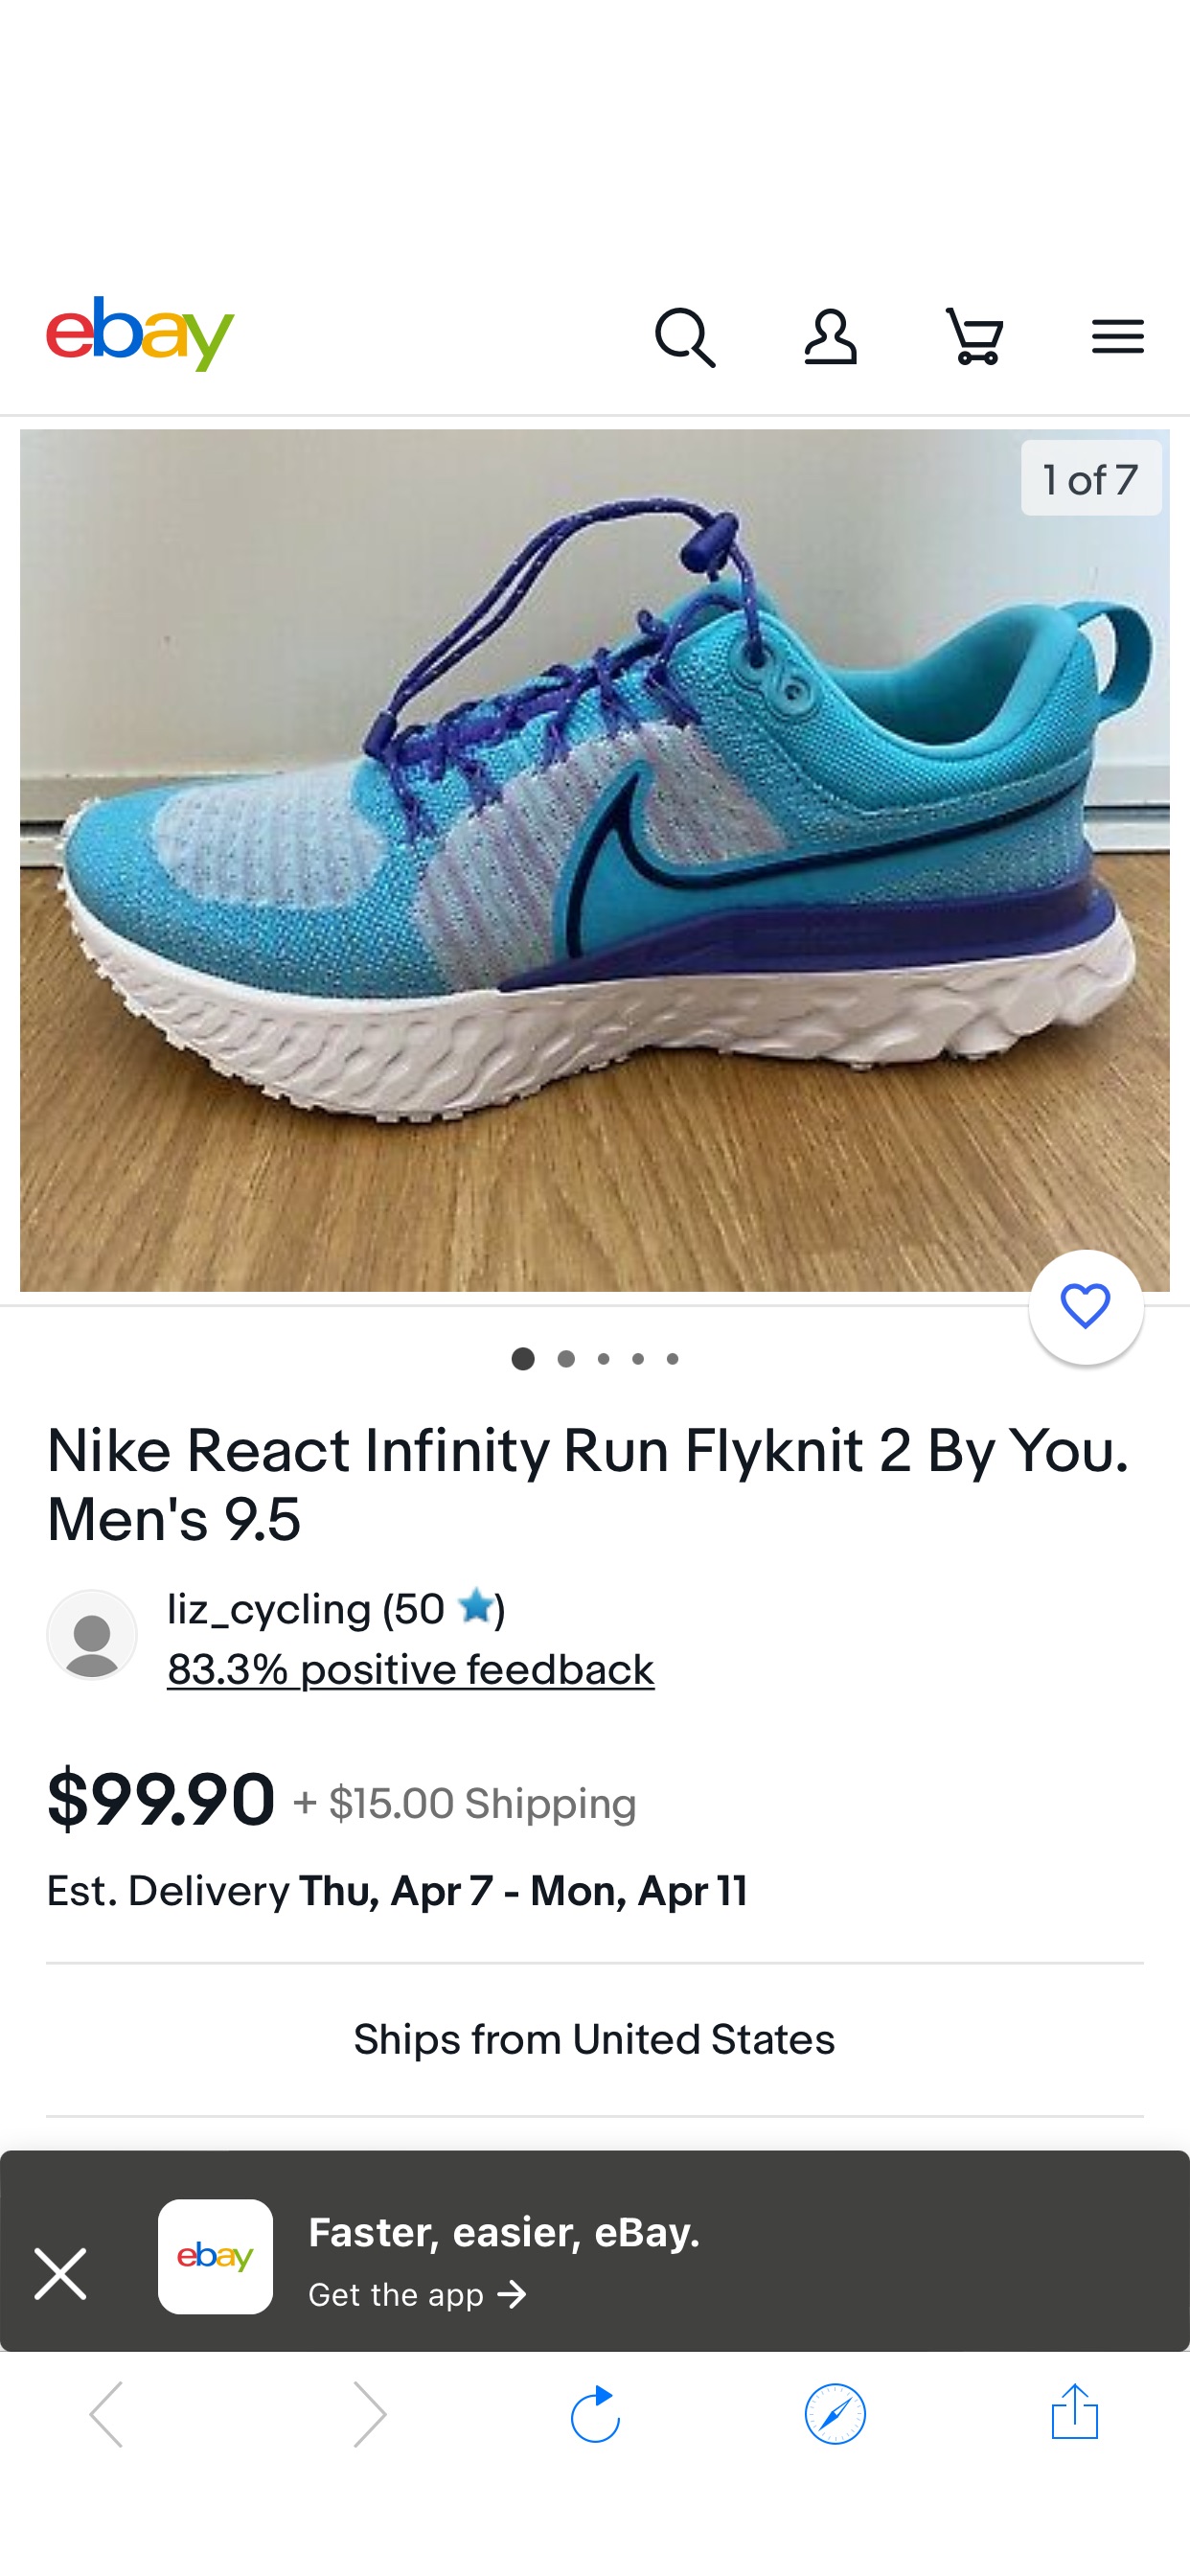 Nike React Infinity Run Flyknit 2 By You. Men's 9.5 | eBay 耐克跑鞋限定款